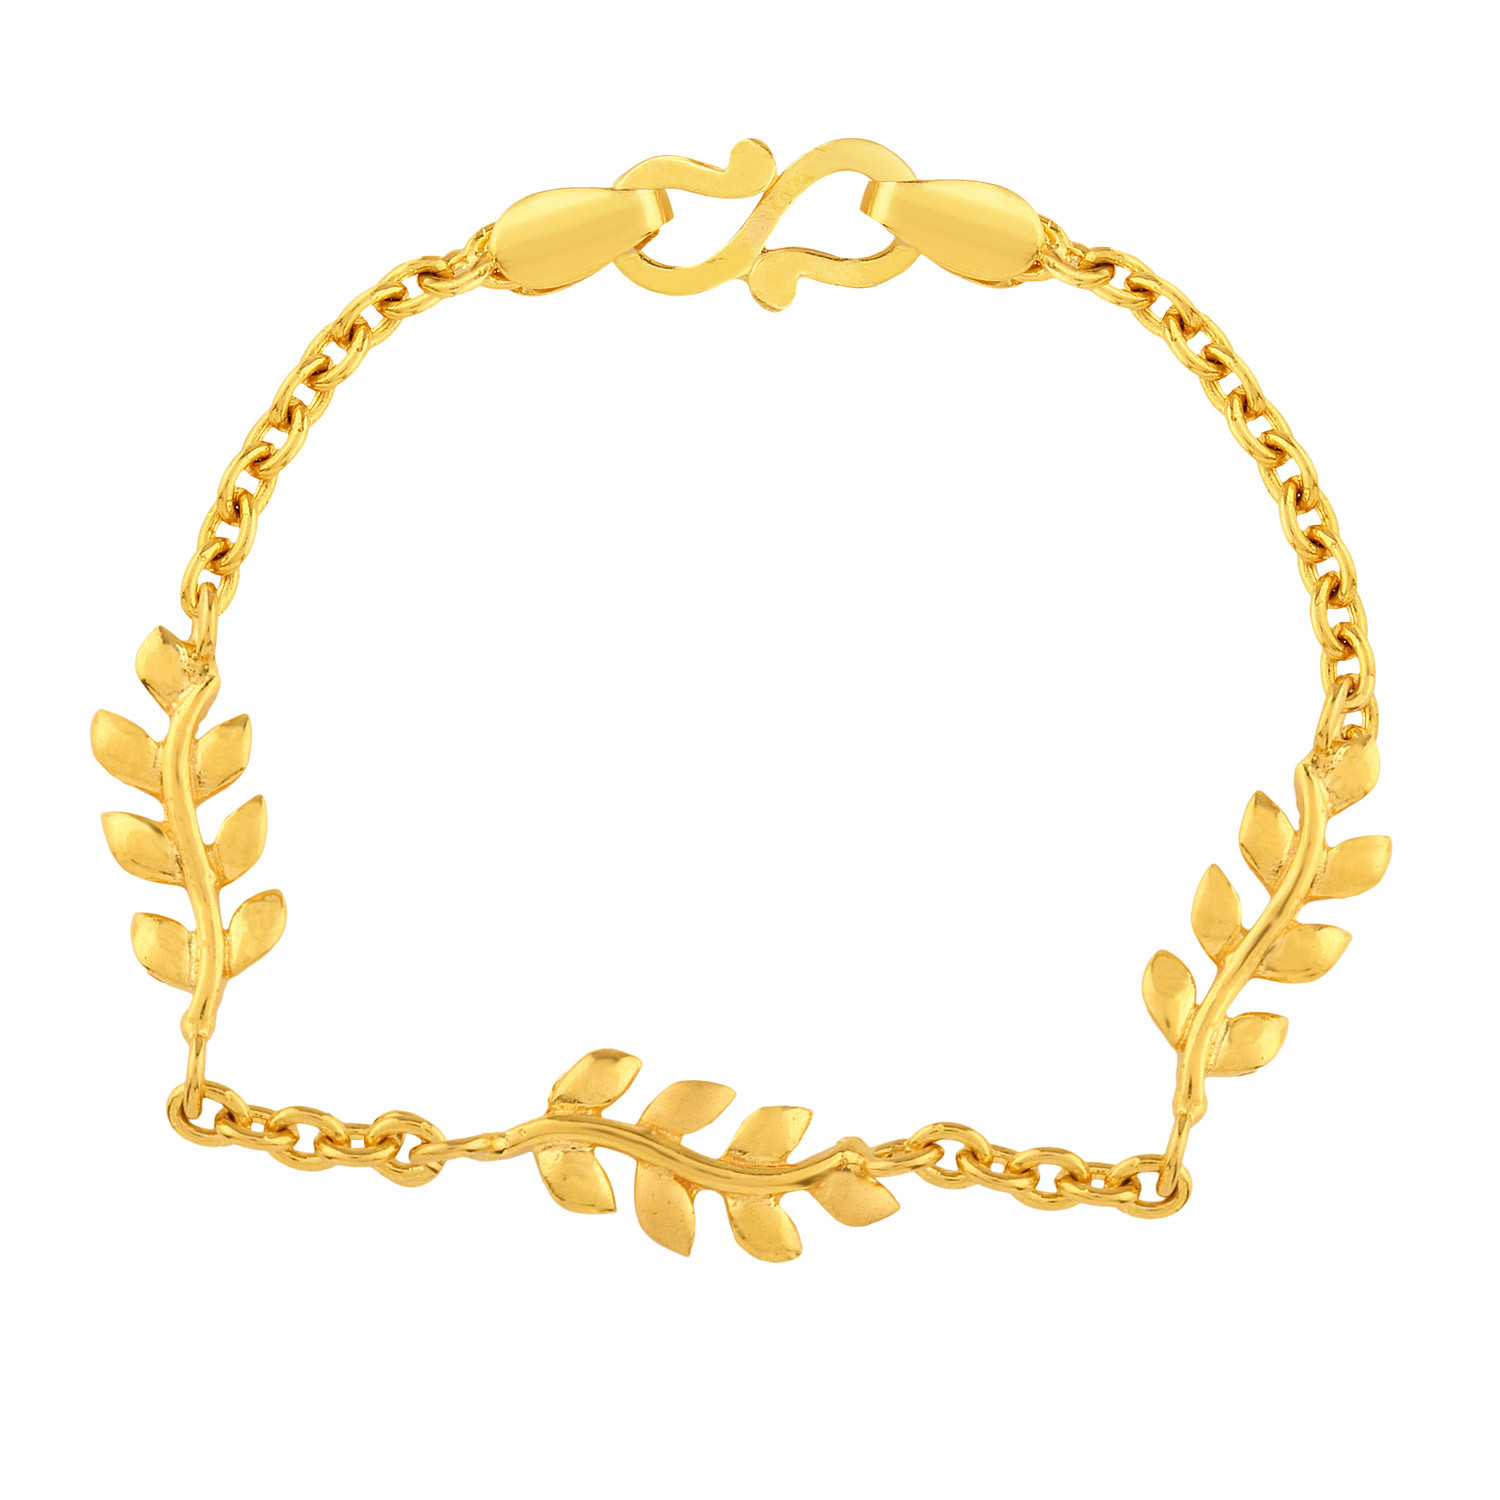 Starlet 22 KT Gold Studded Bracelet For Kids BRKDNOSG003